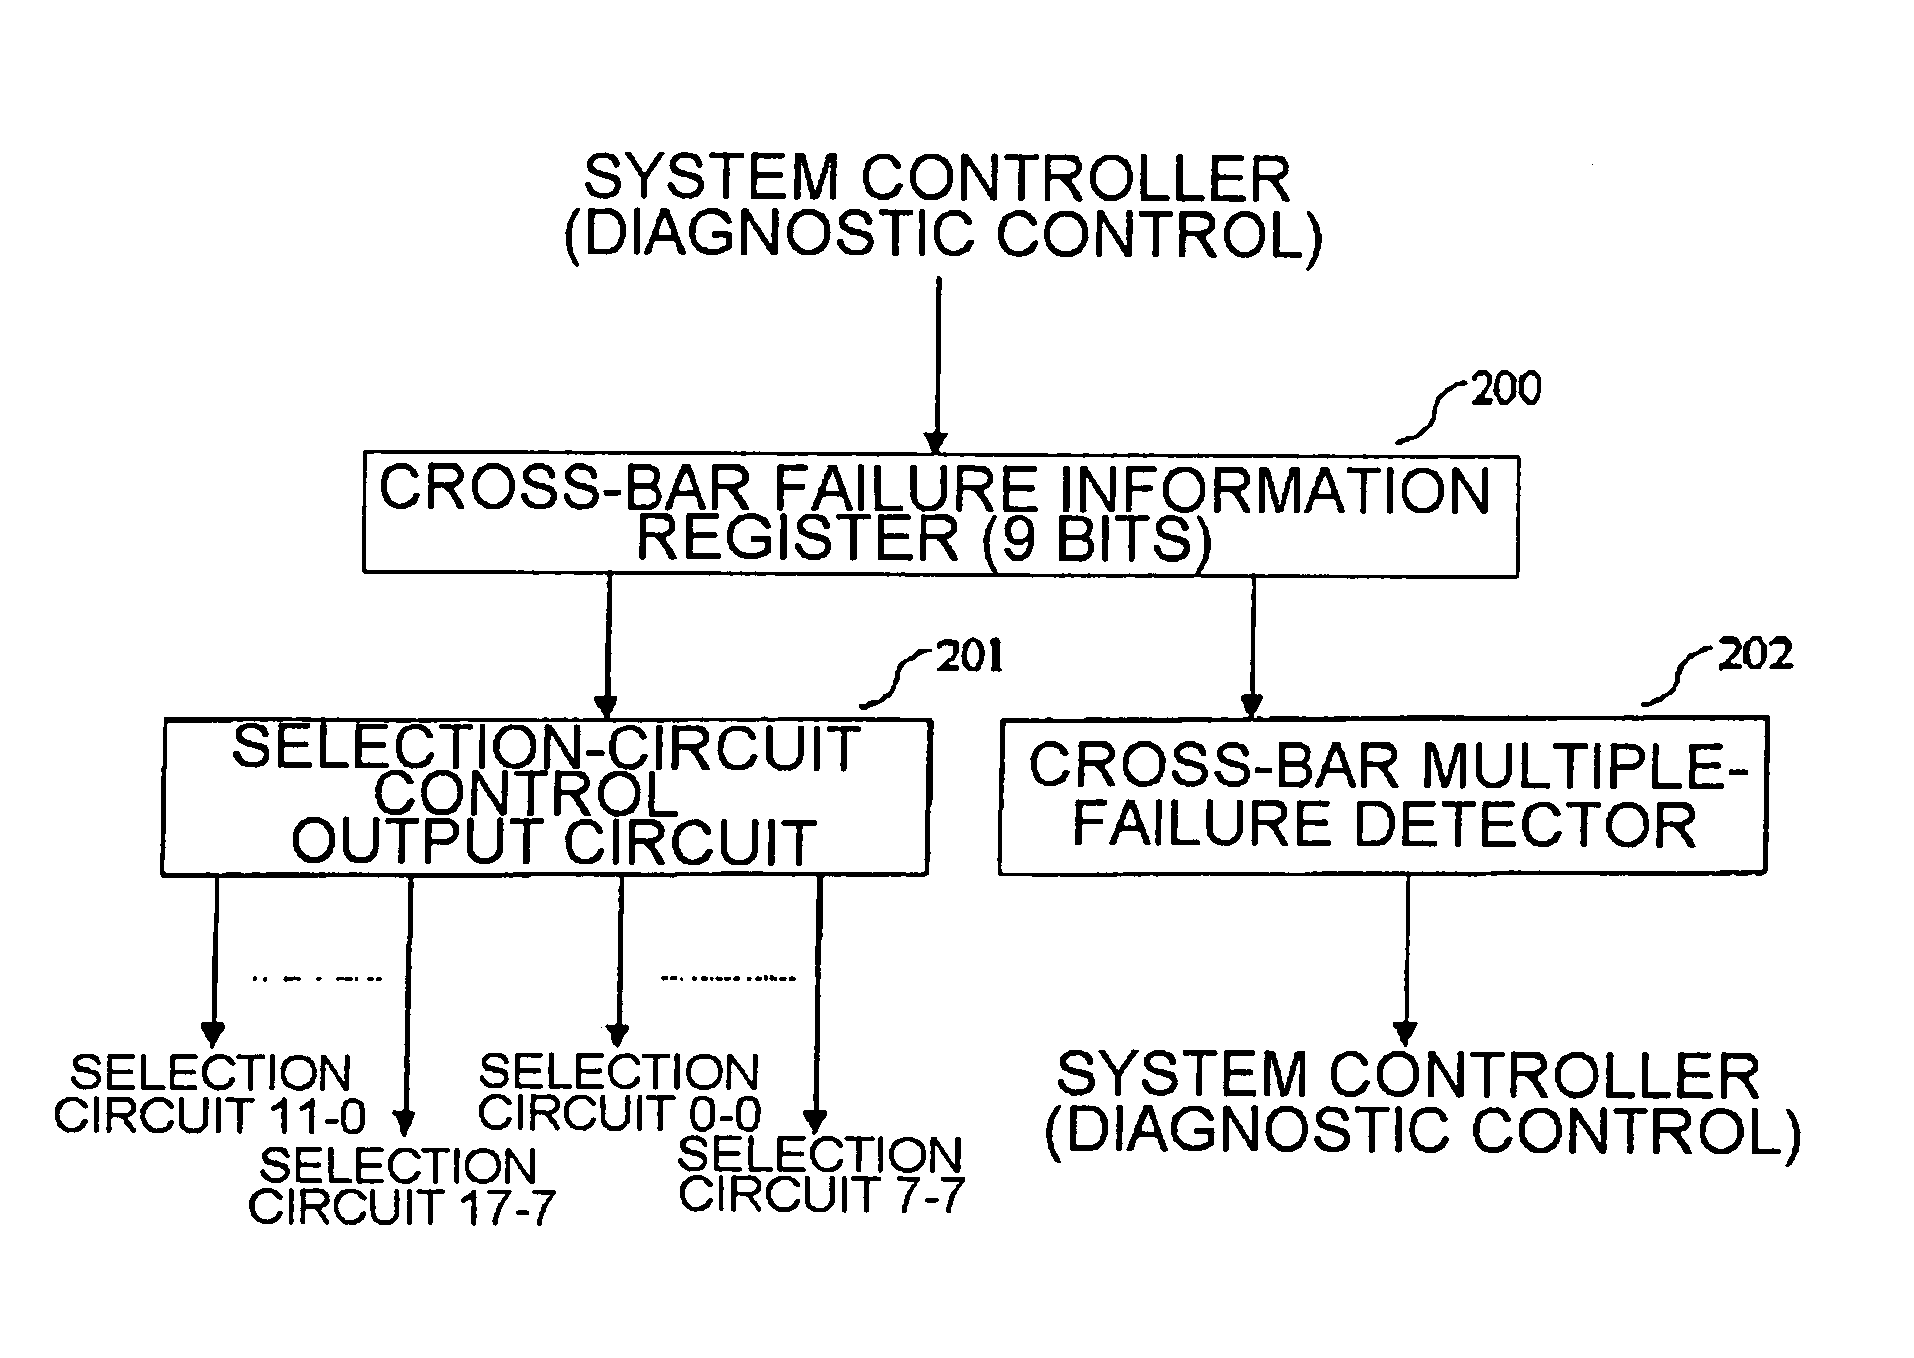 Cross-bar switch system with redundancy